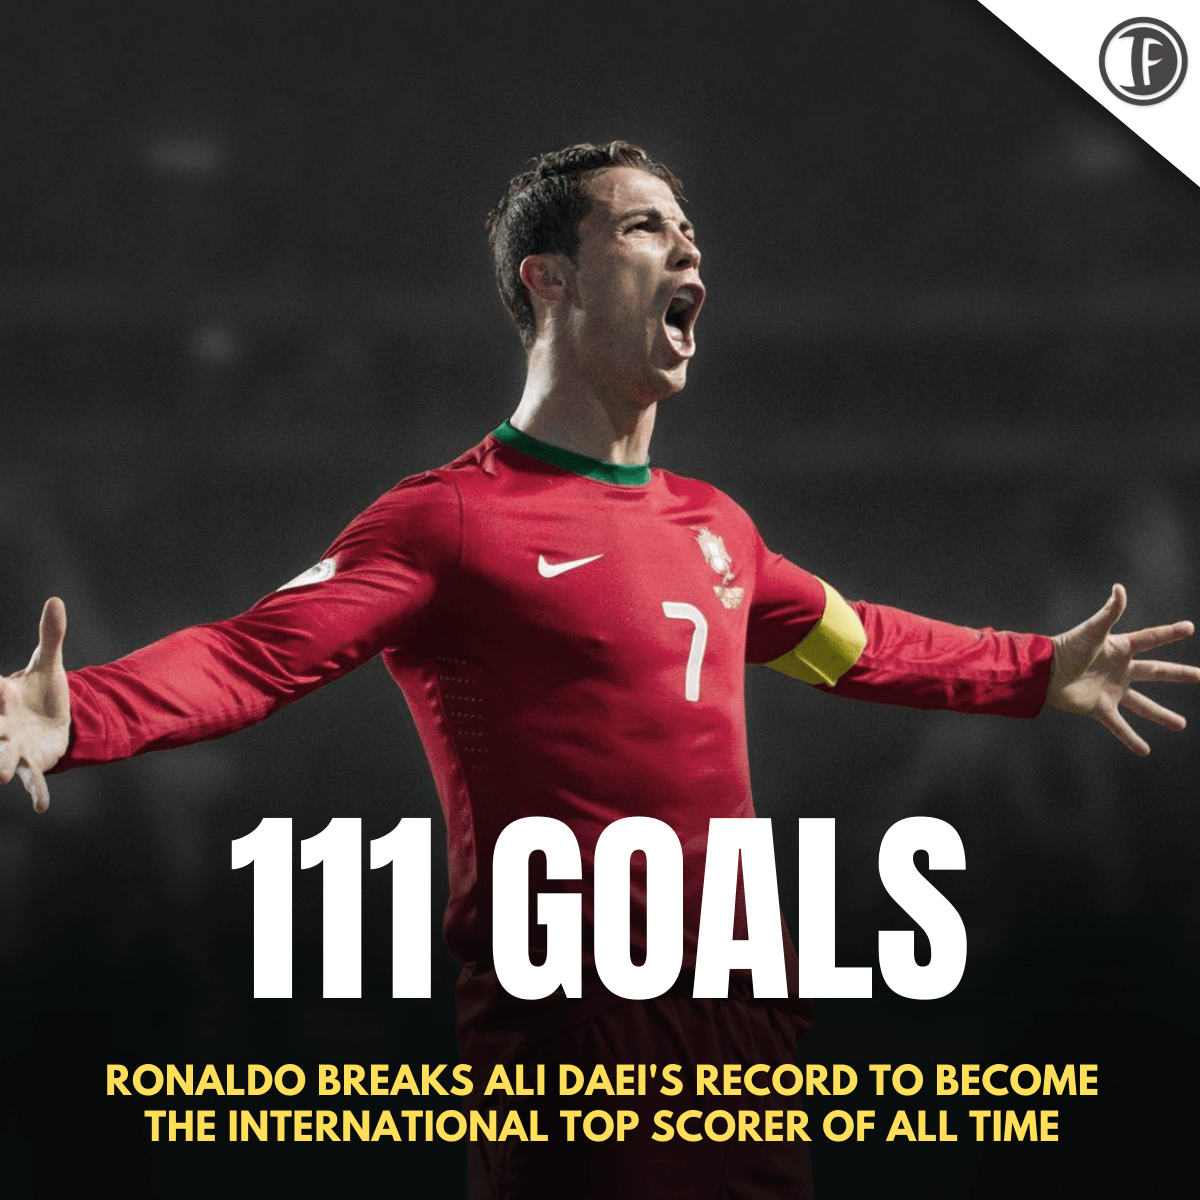 Ronaldo become the international top scorer of all time